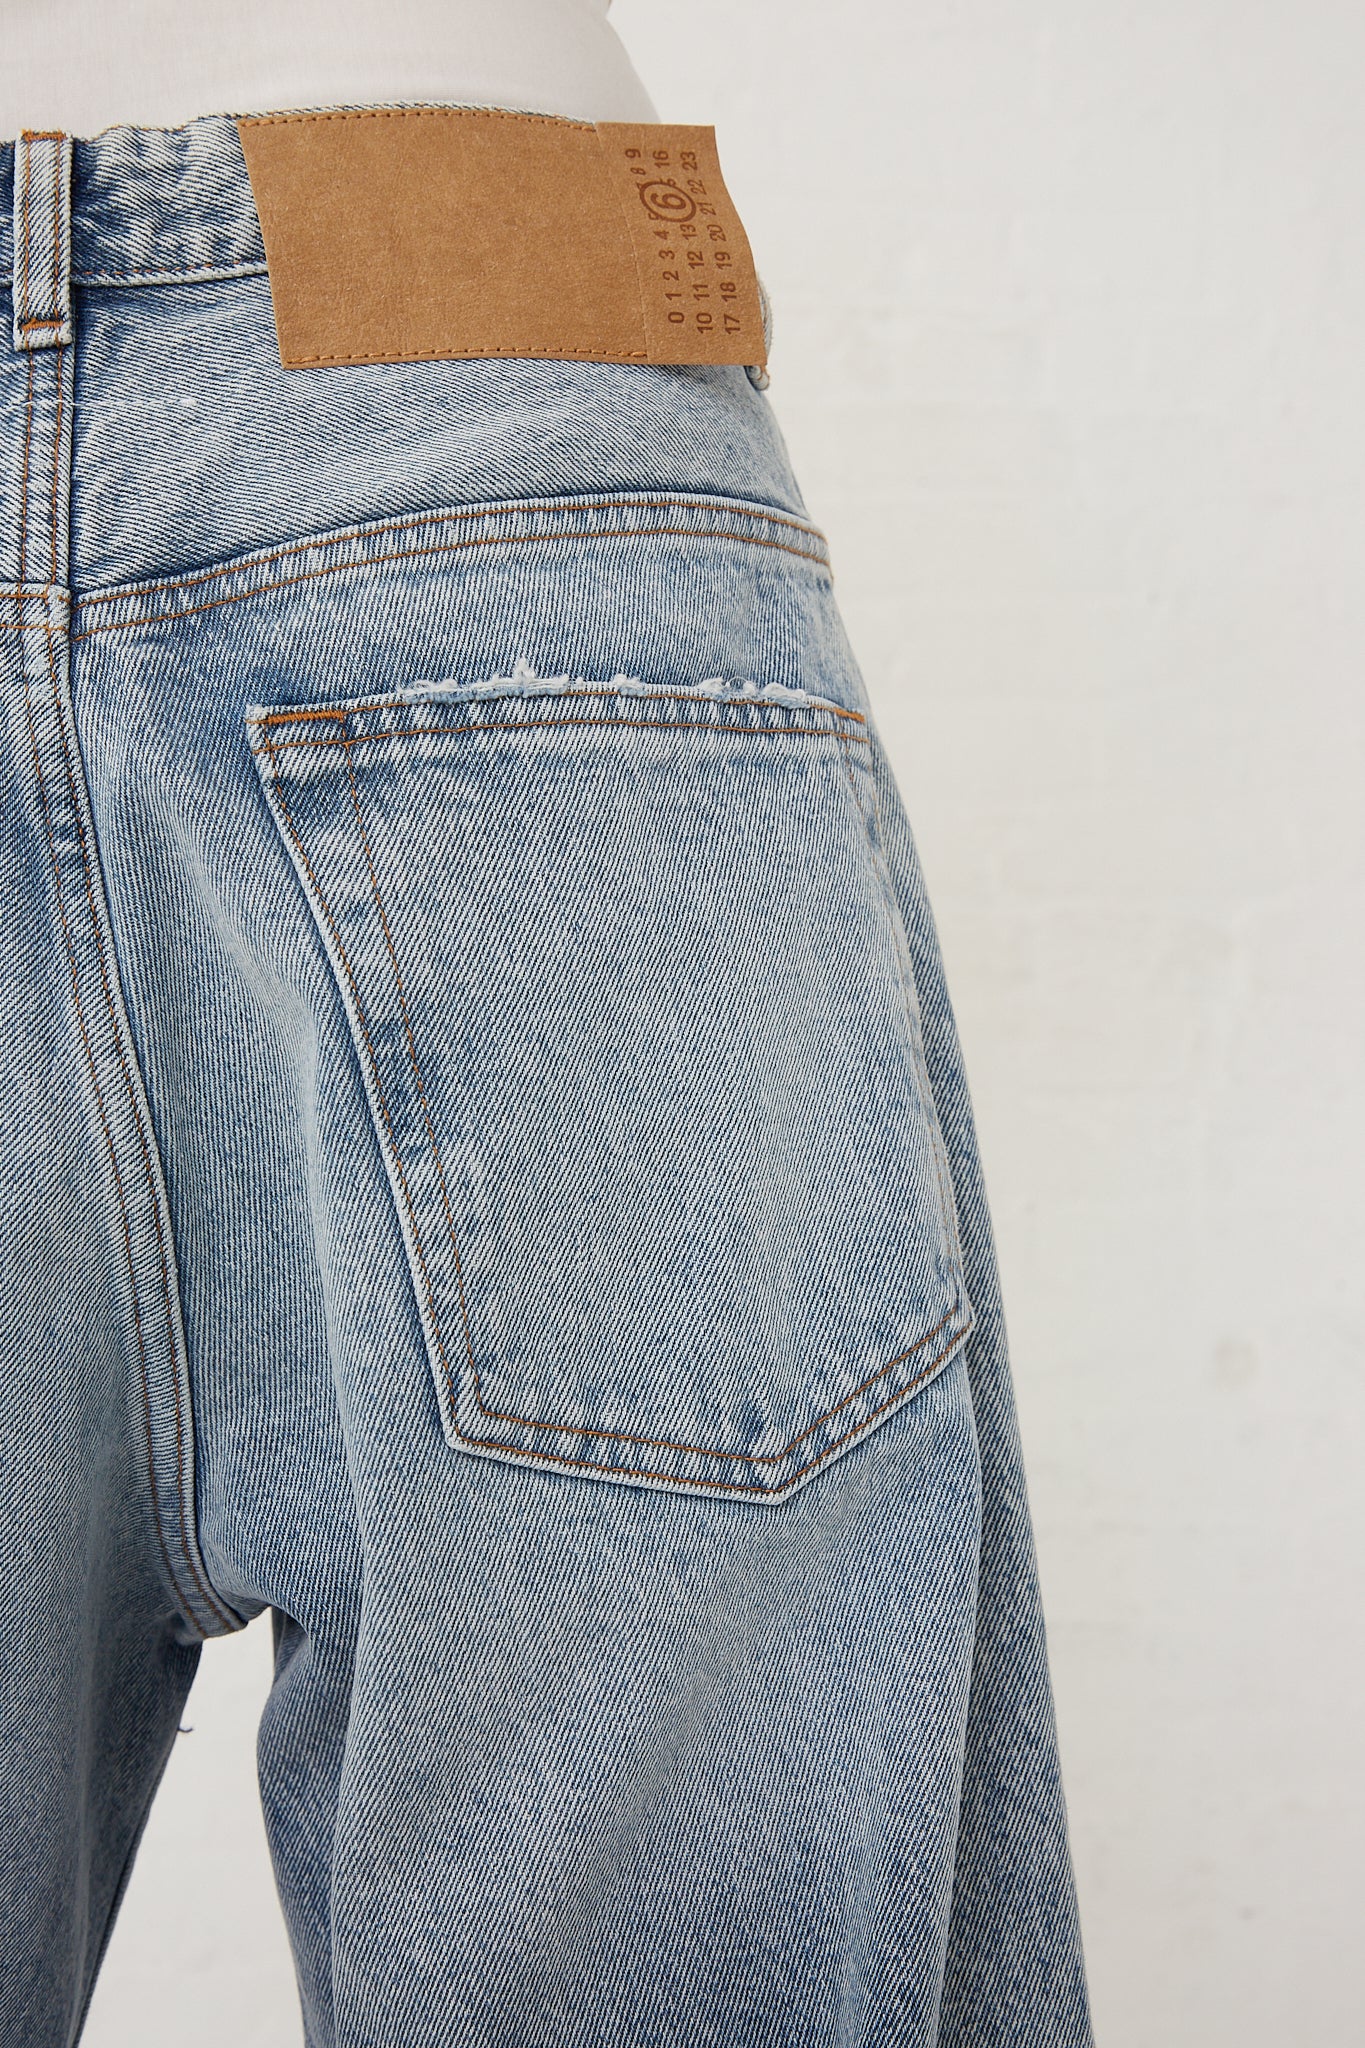 The back of a woman's MM6 light indigo denim shorts featuring a classic 5-pocket design.